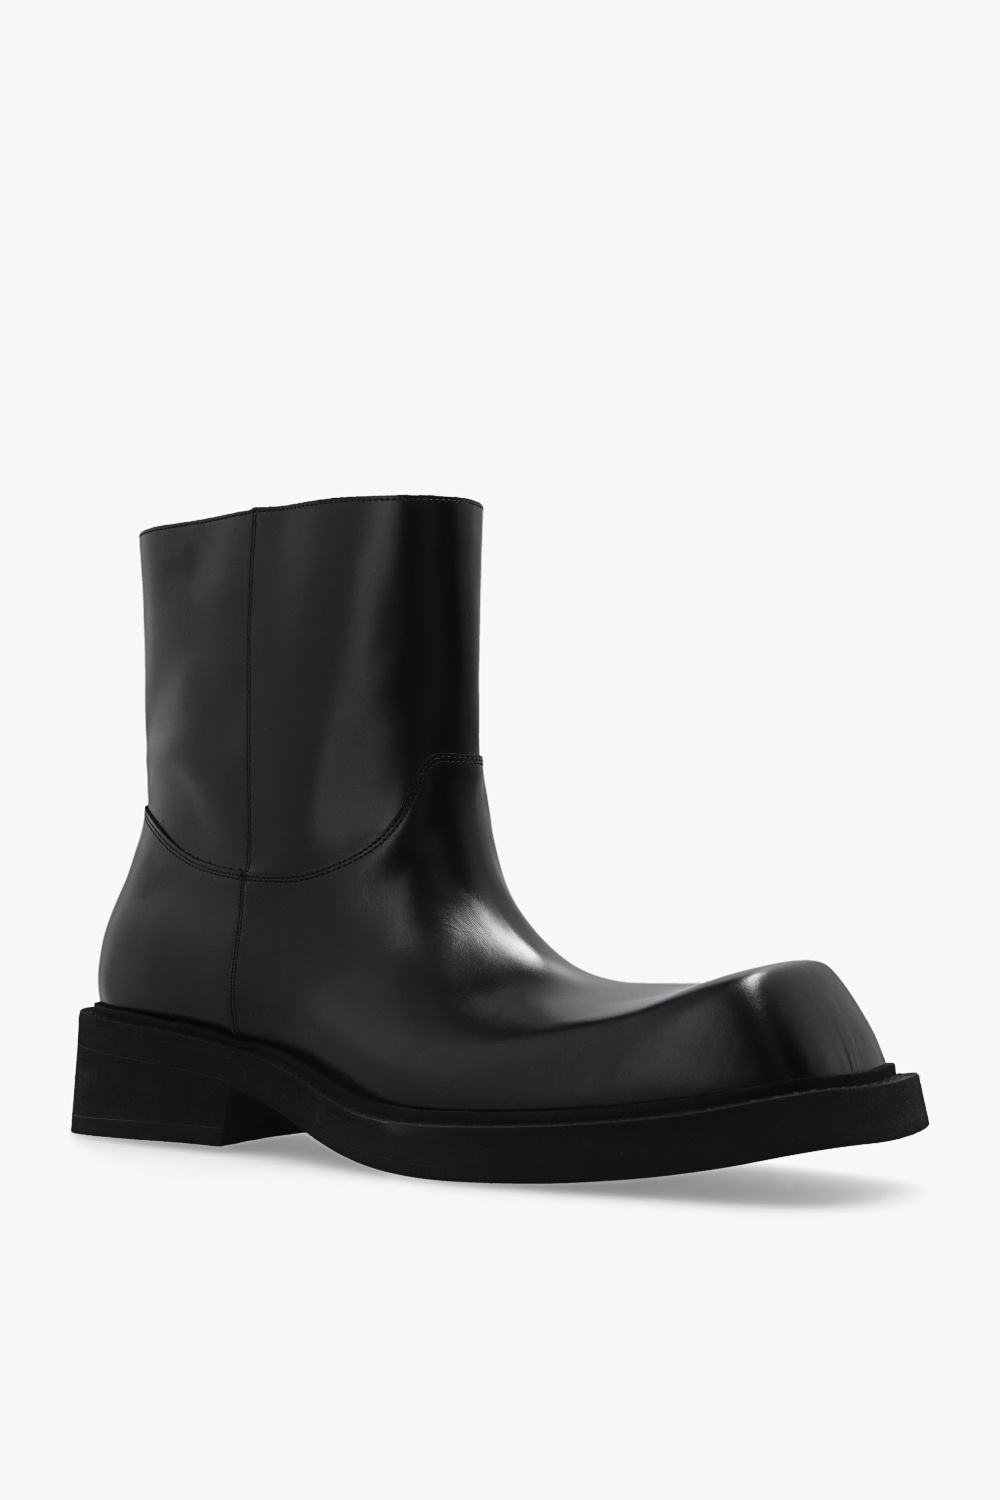 Louis Vuitton Illusion Ankle Boot BLACK. Size 36.5